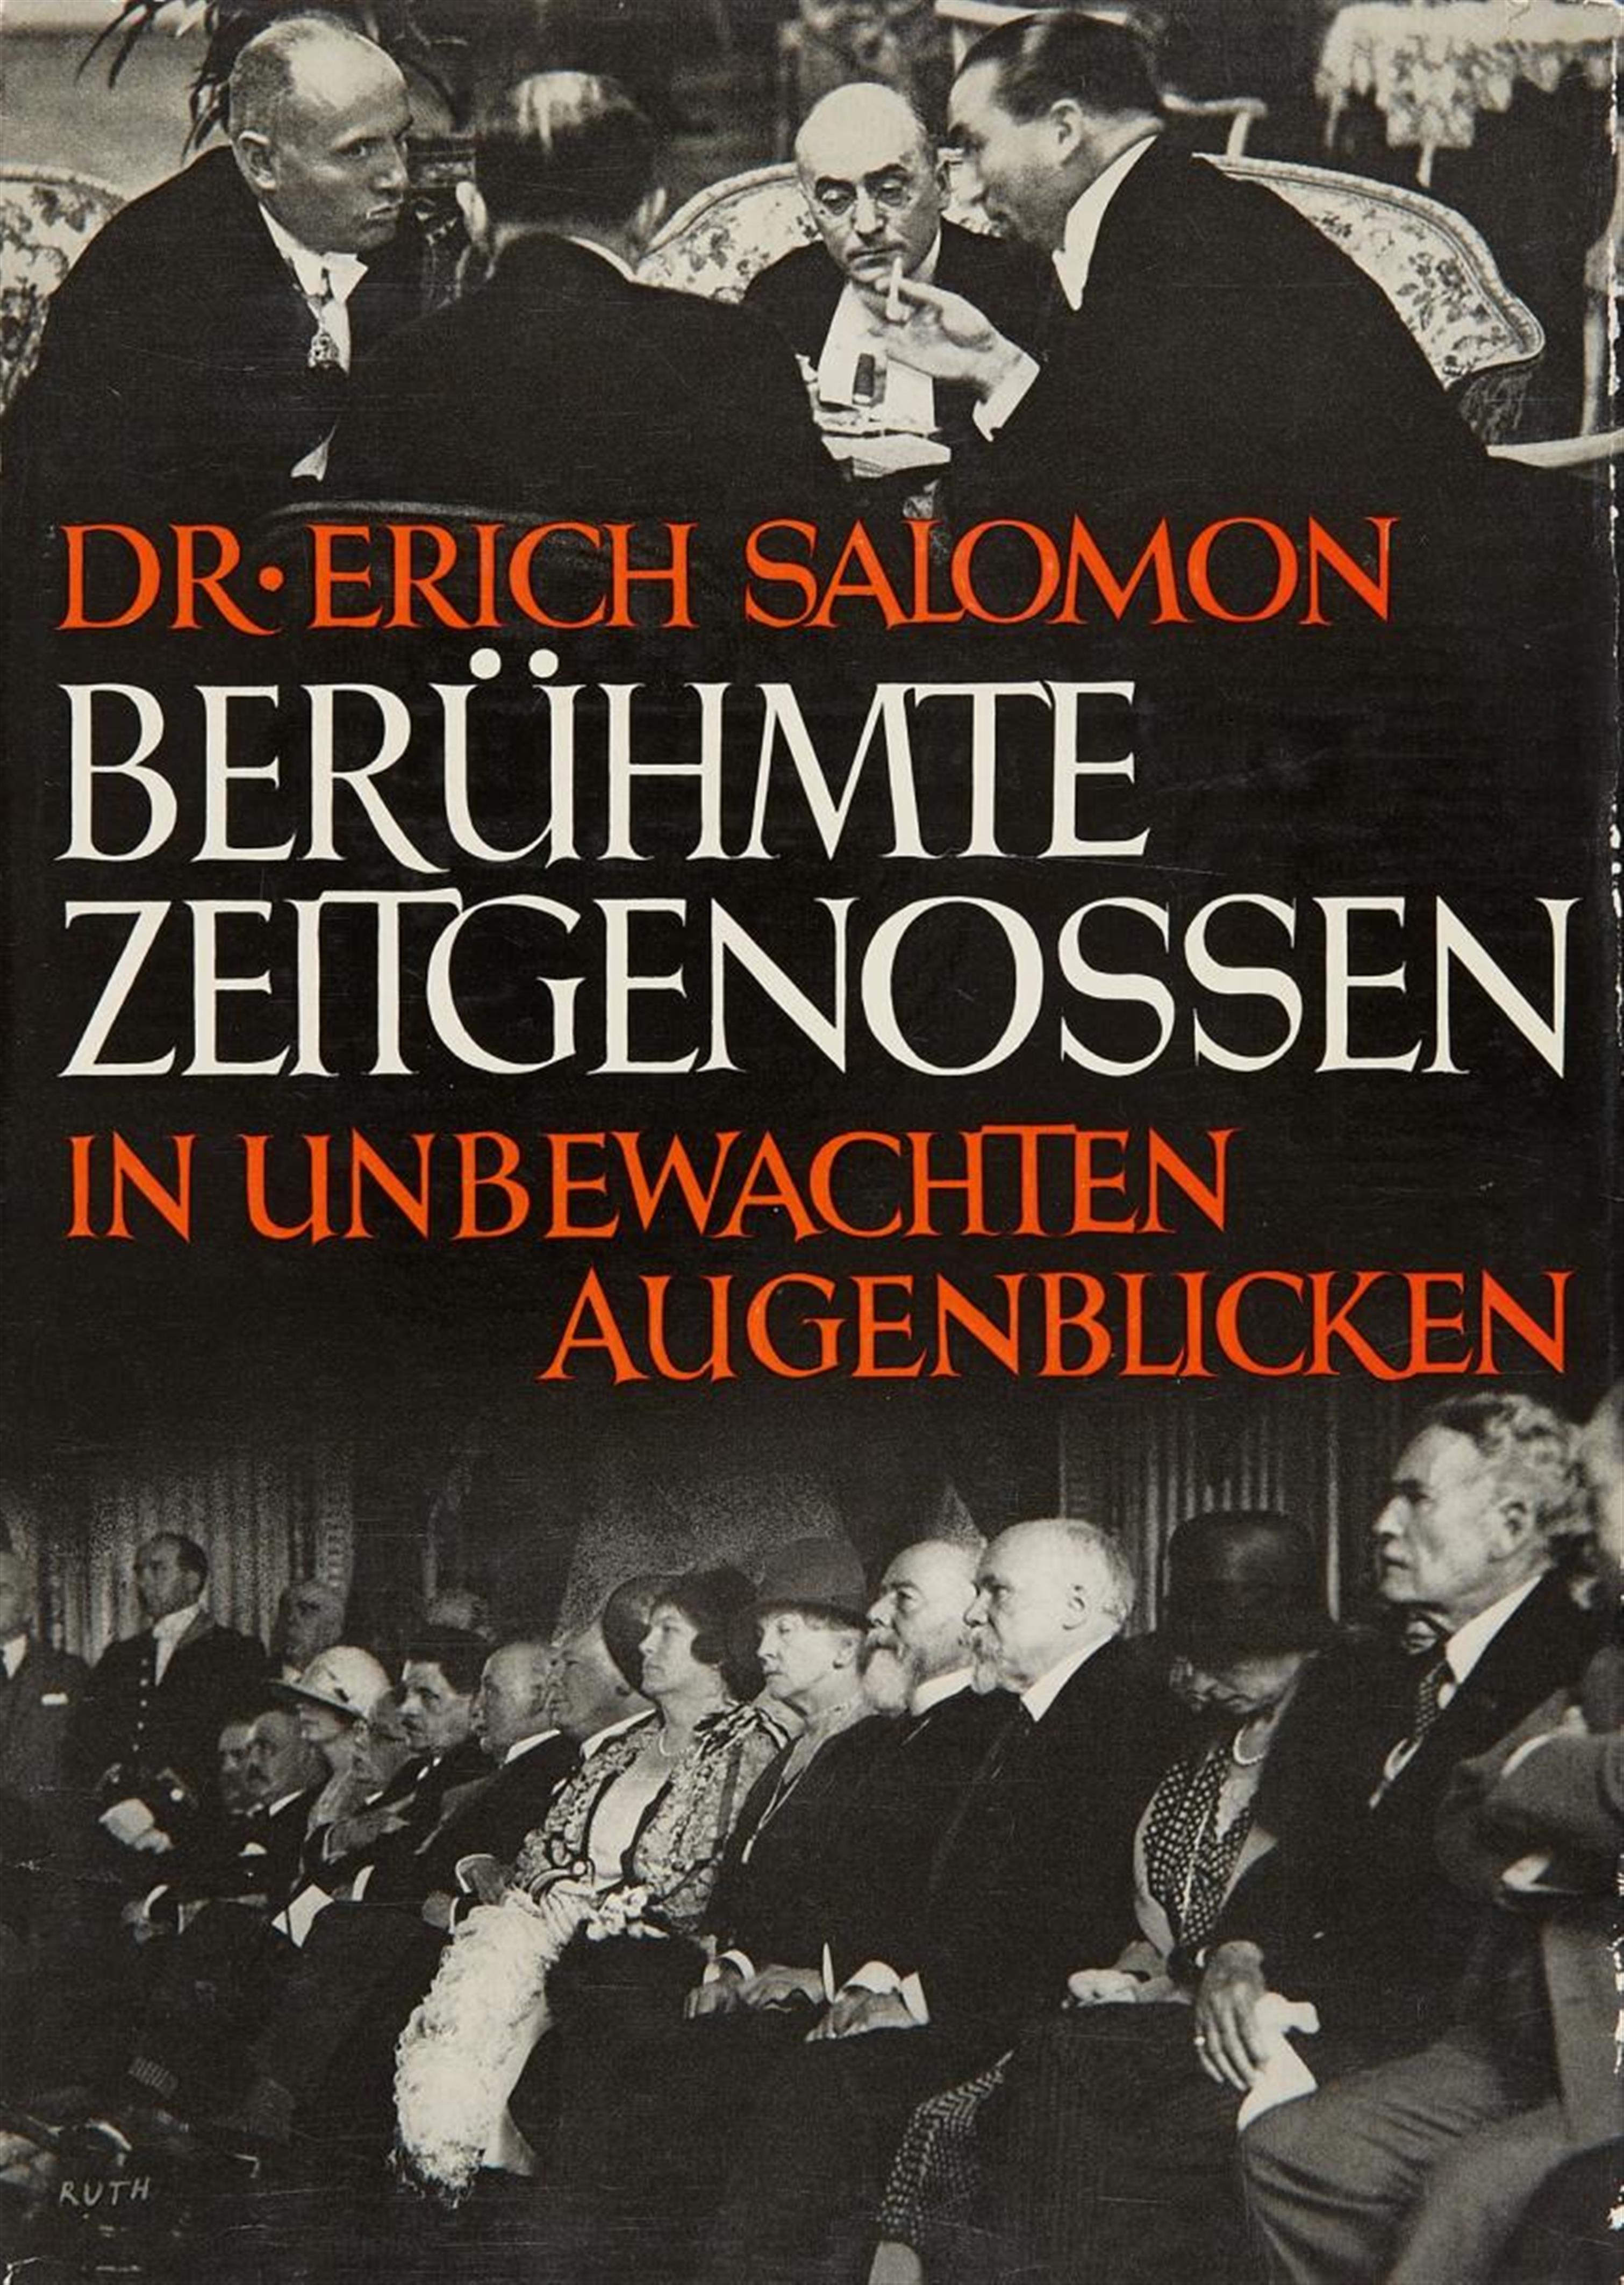 Erich Salomon - Berühmte Zeitgenossen in unbewachten Augenblicken - image-1